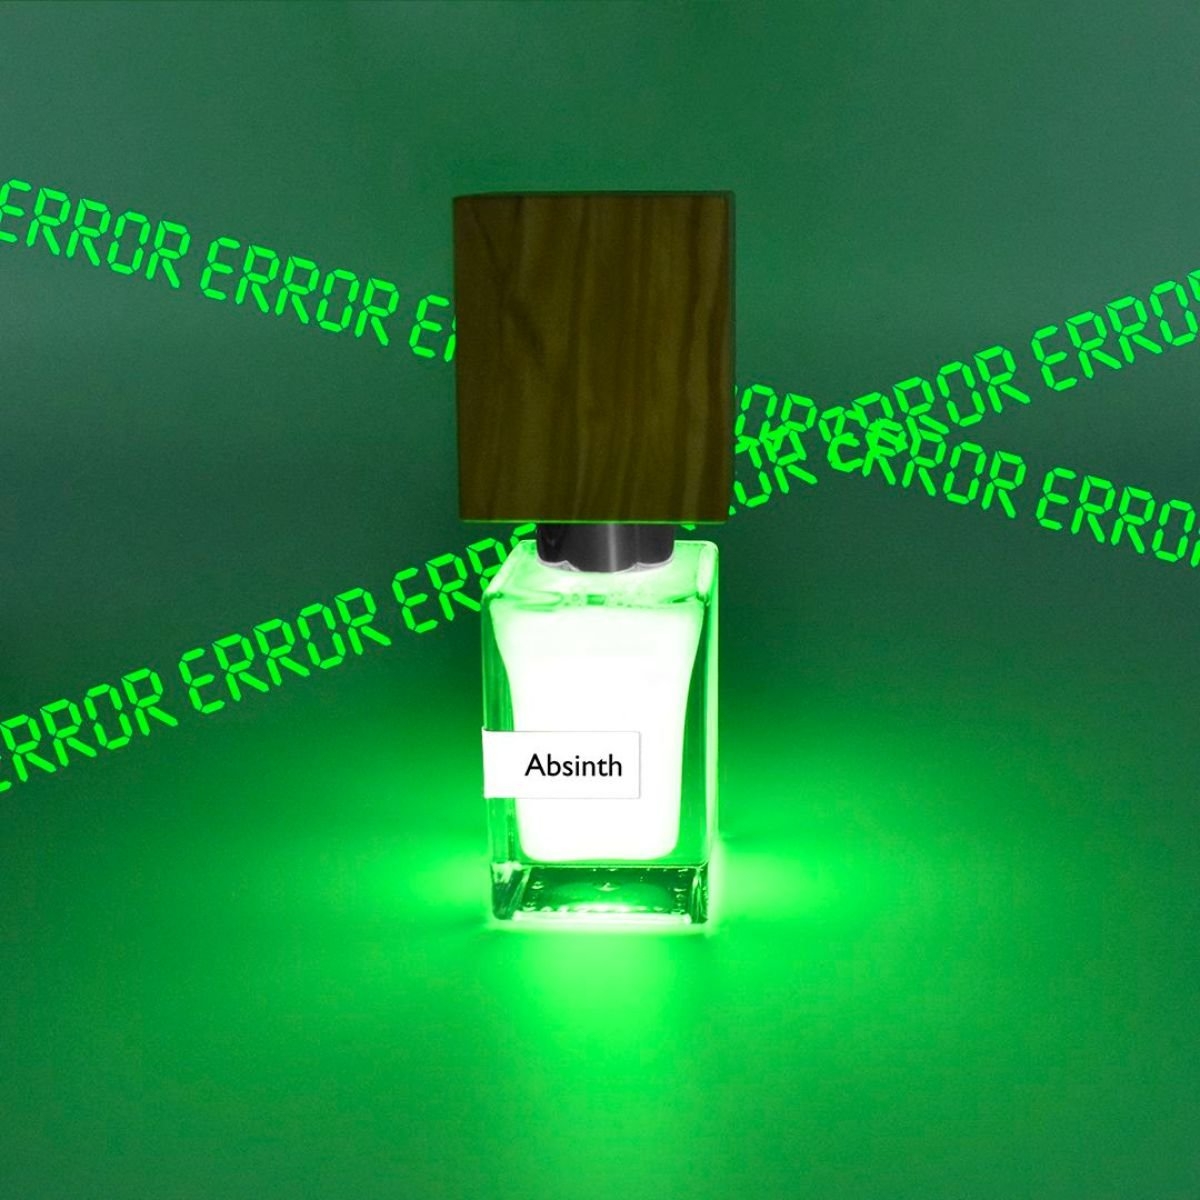 Image of Absinth extrait de parfum 30 ml by the perfume brand Nasomatto